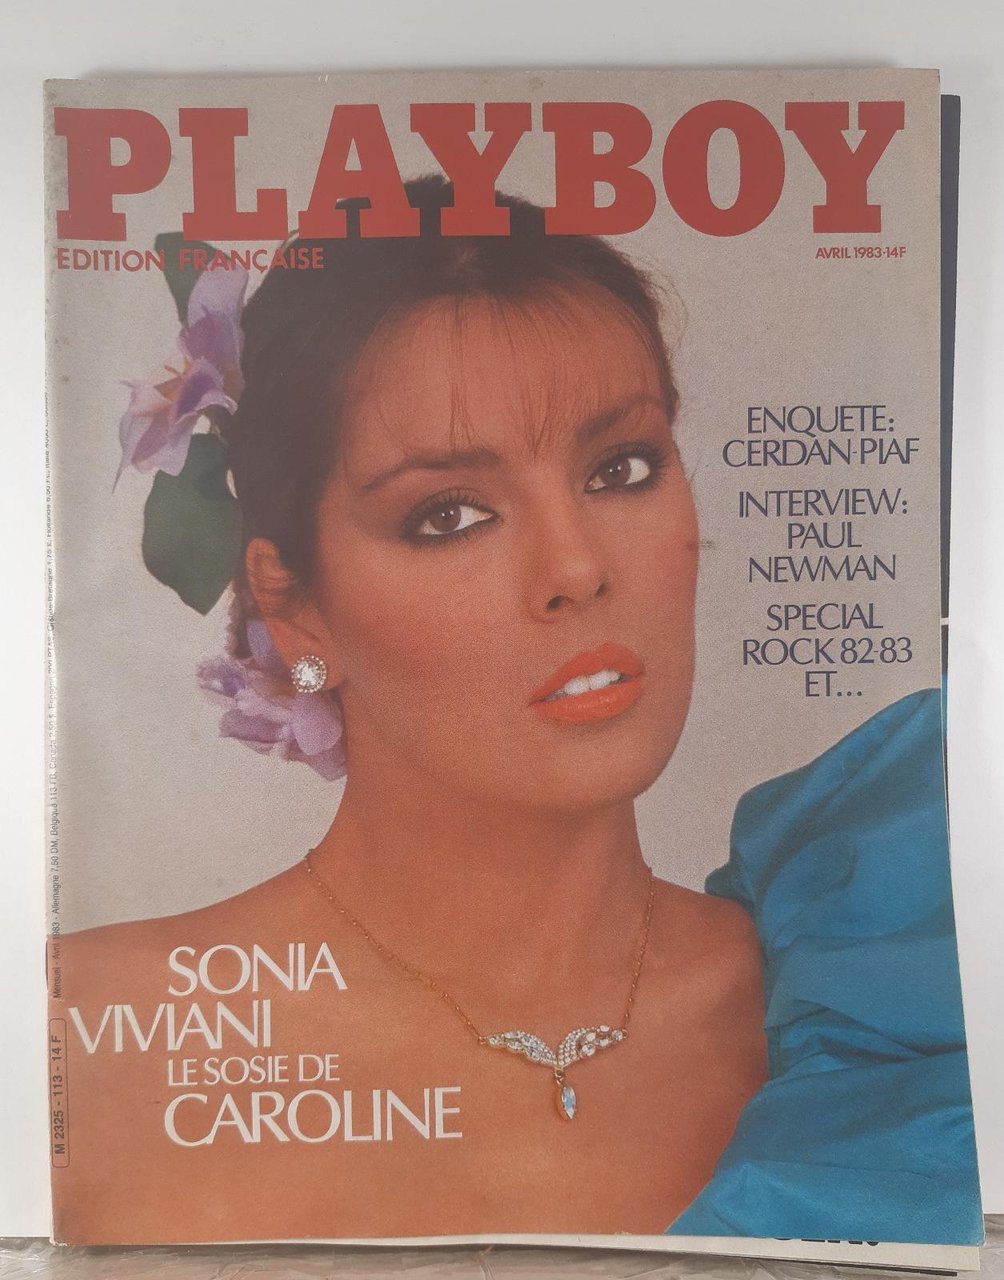 Playboy Aprile 1983 edizione francese